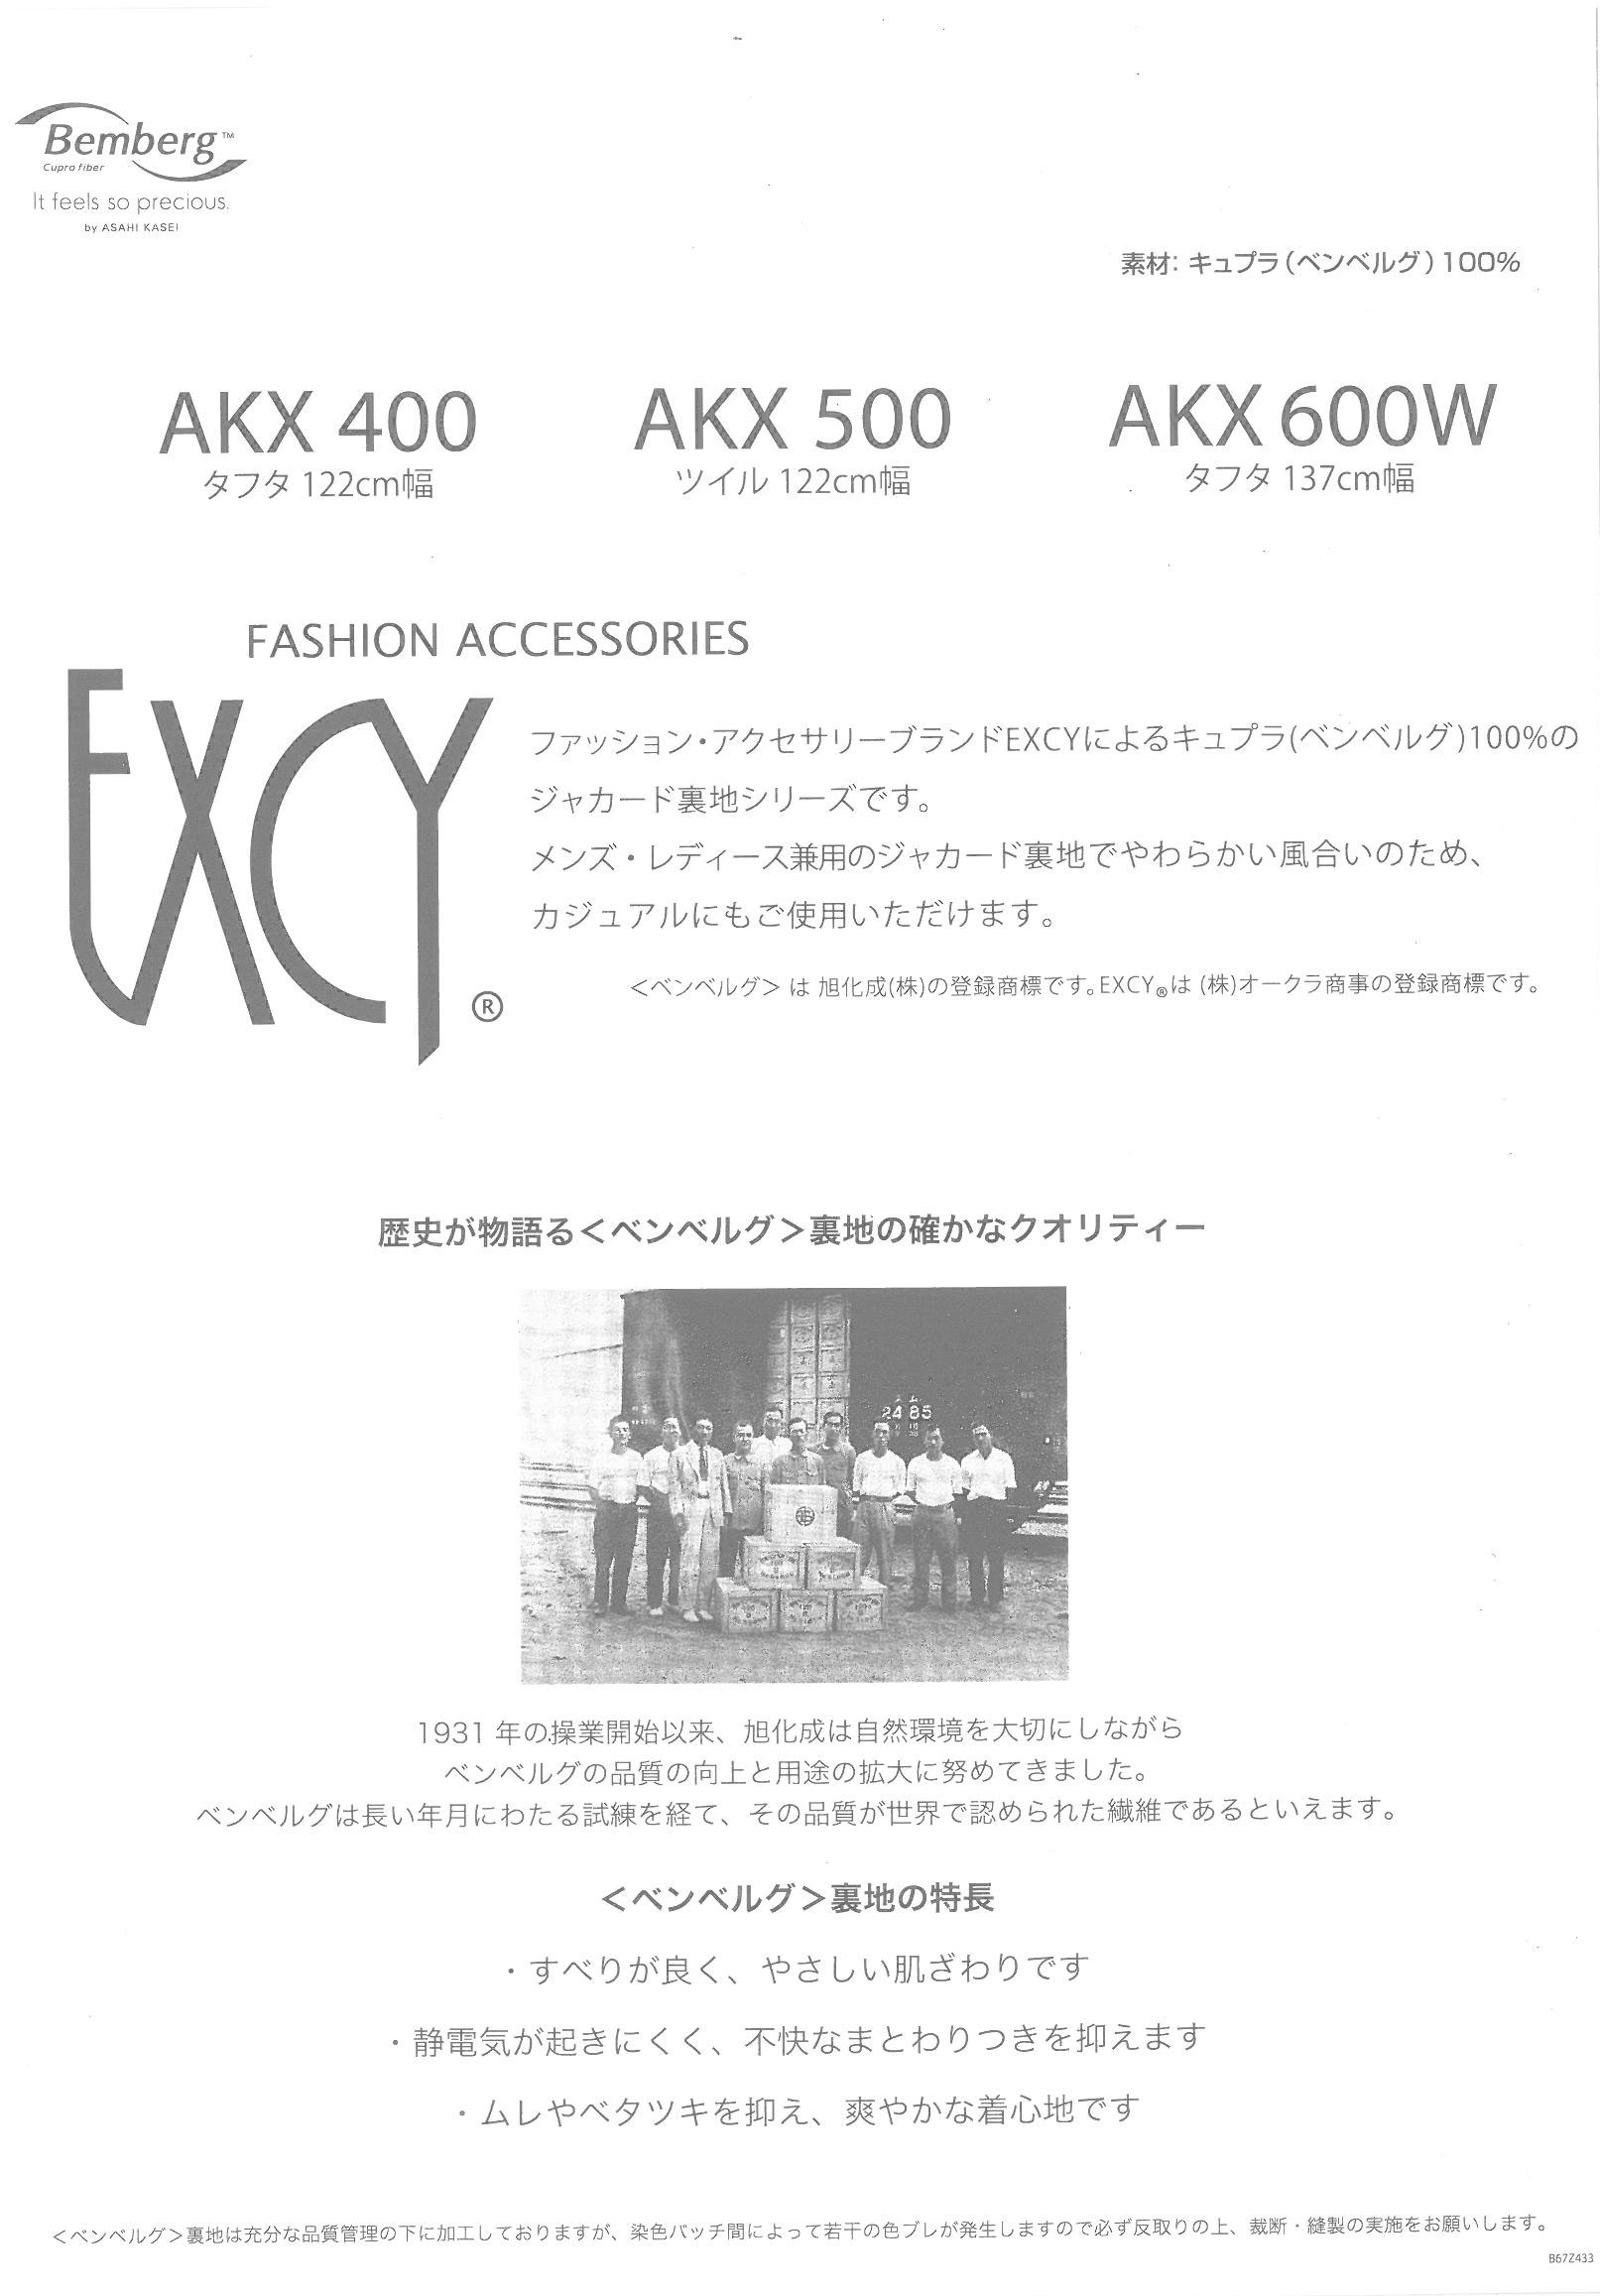 AKX400 Flower Pattern Jacquard Bemberg 100% Lining EXCY Original Asahi KASEI Sub Photo